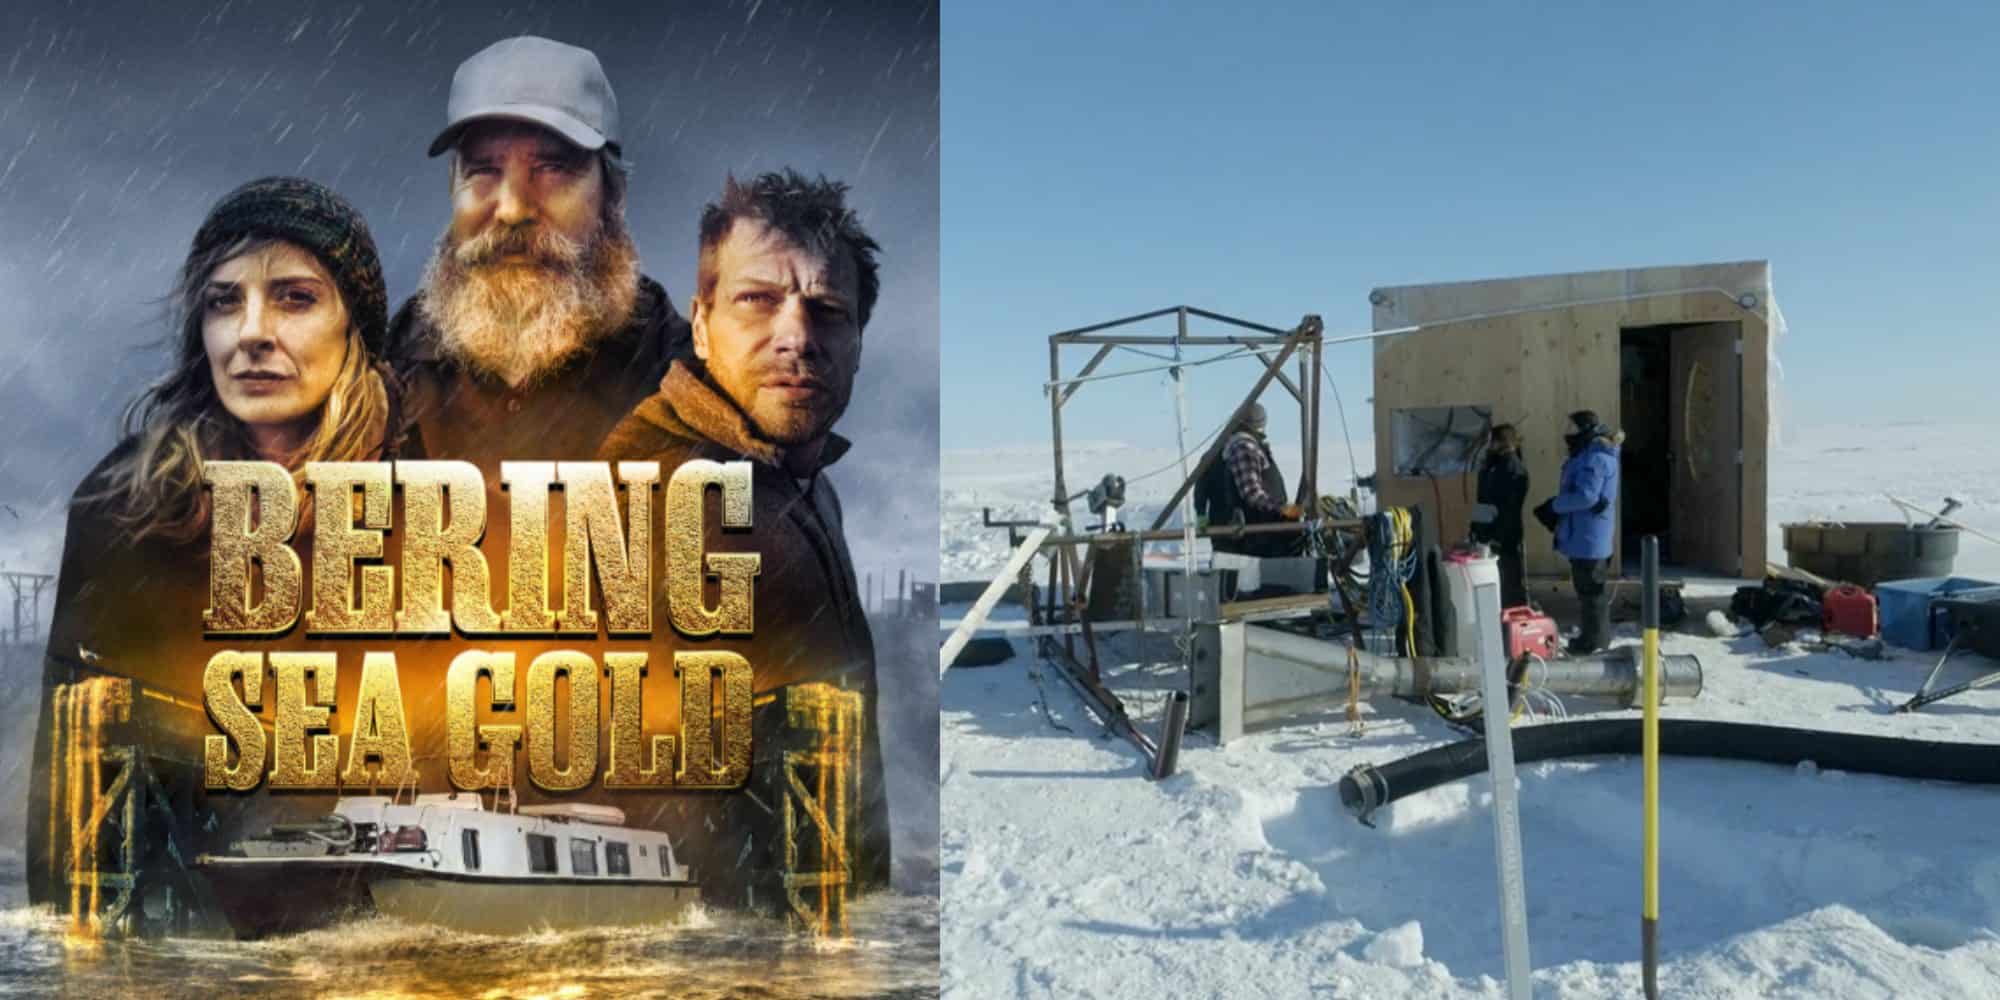 Bering Sea Gold Season 16 Episode 10: Release Date